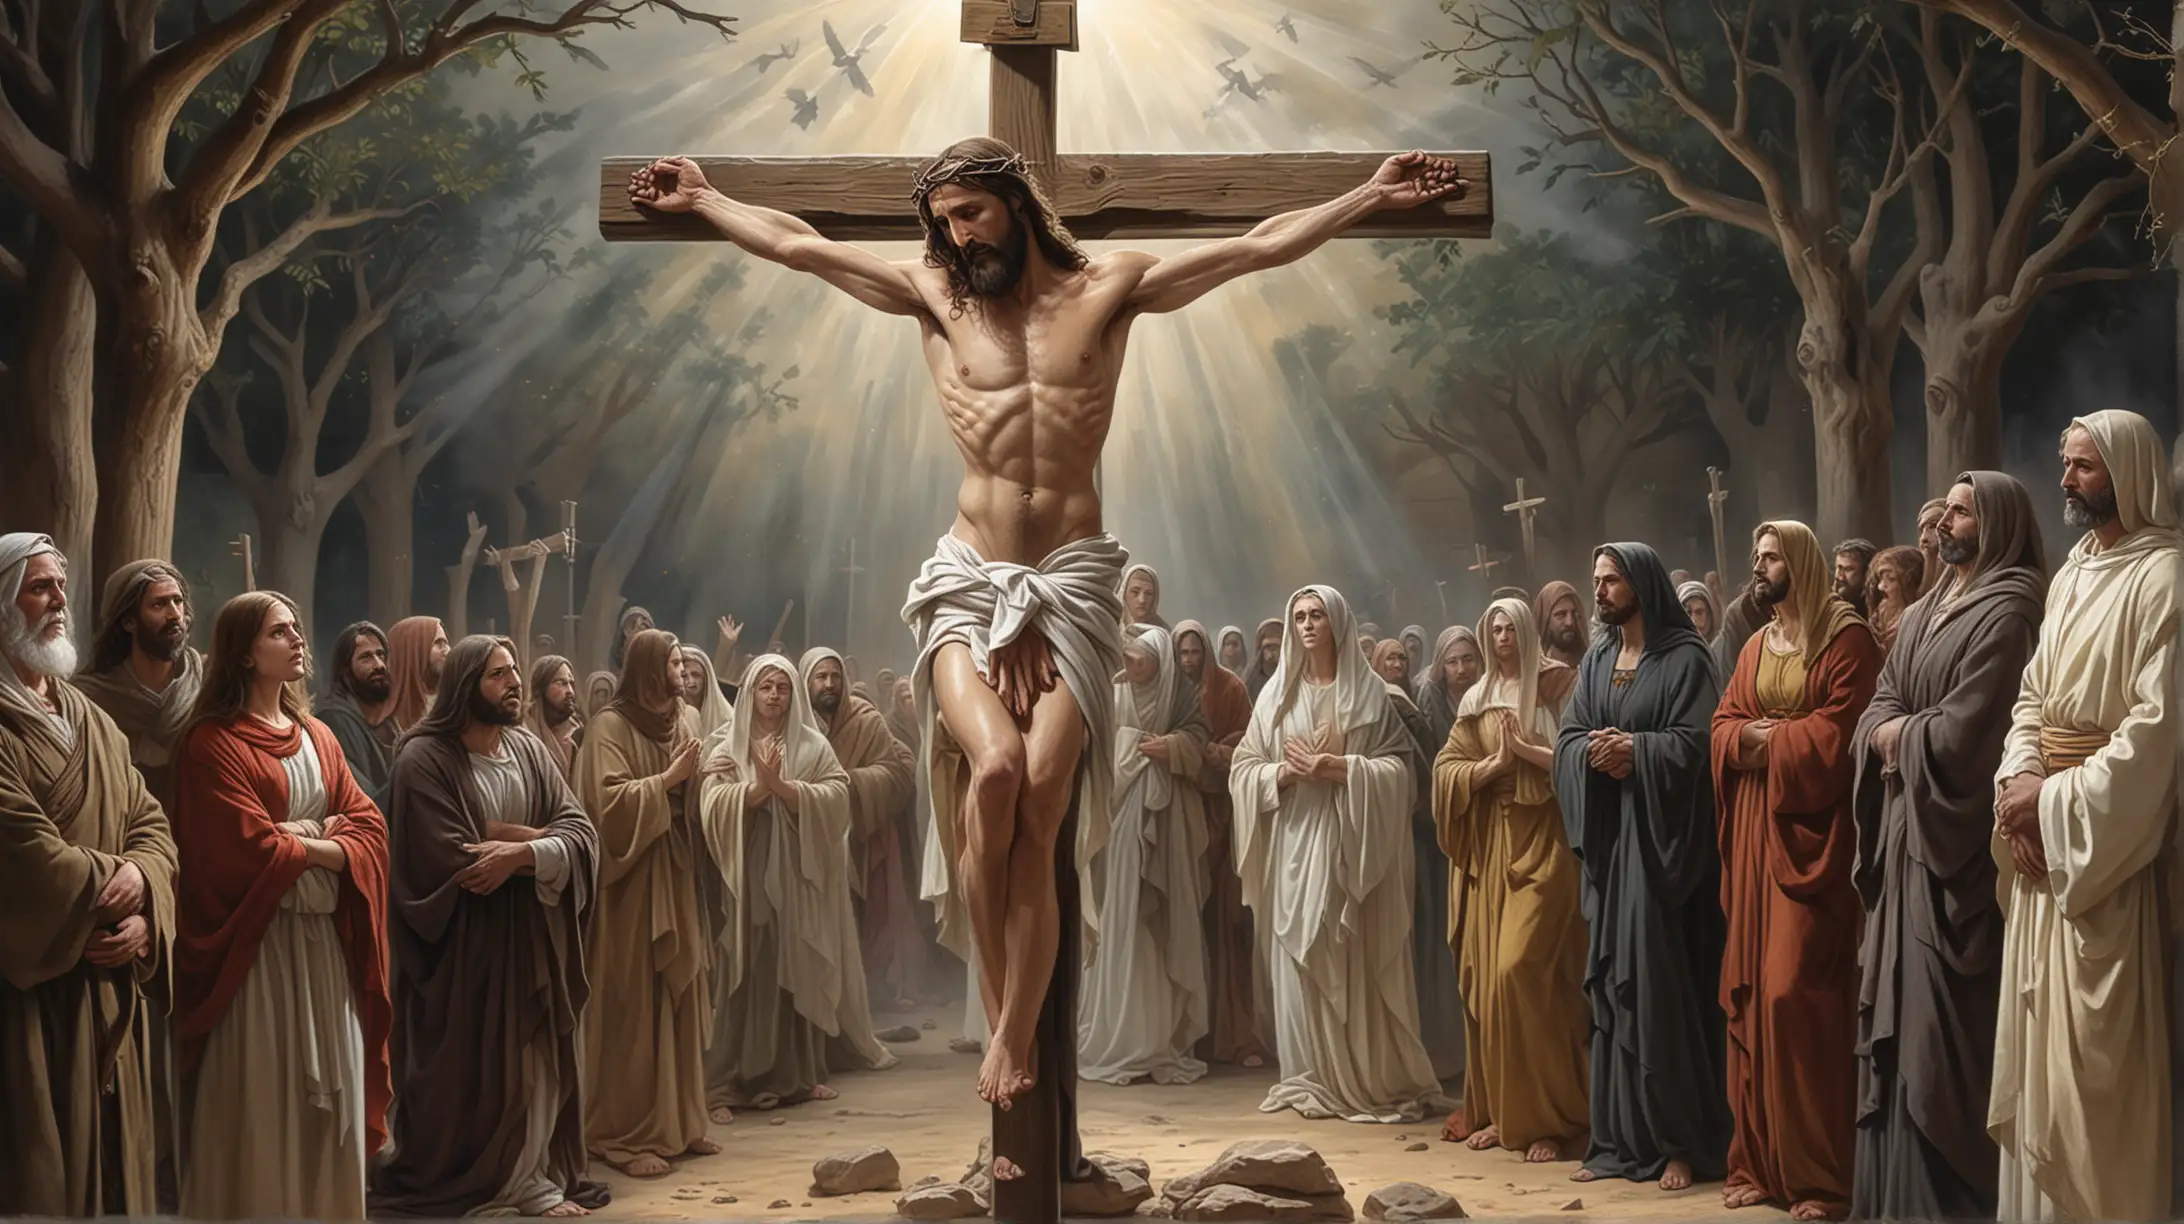 Emotional Depiction of Jesus Crucifixion with Faithful Followers